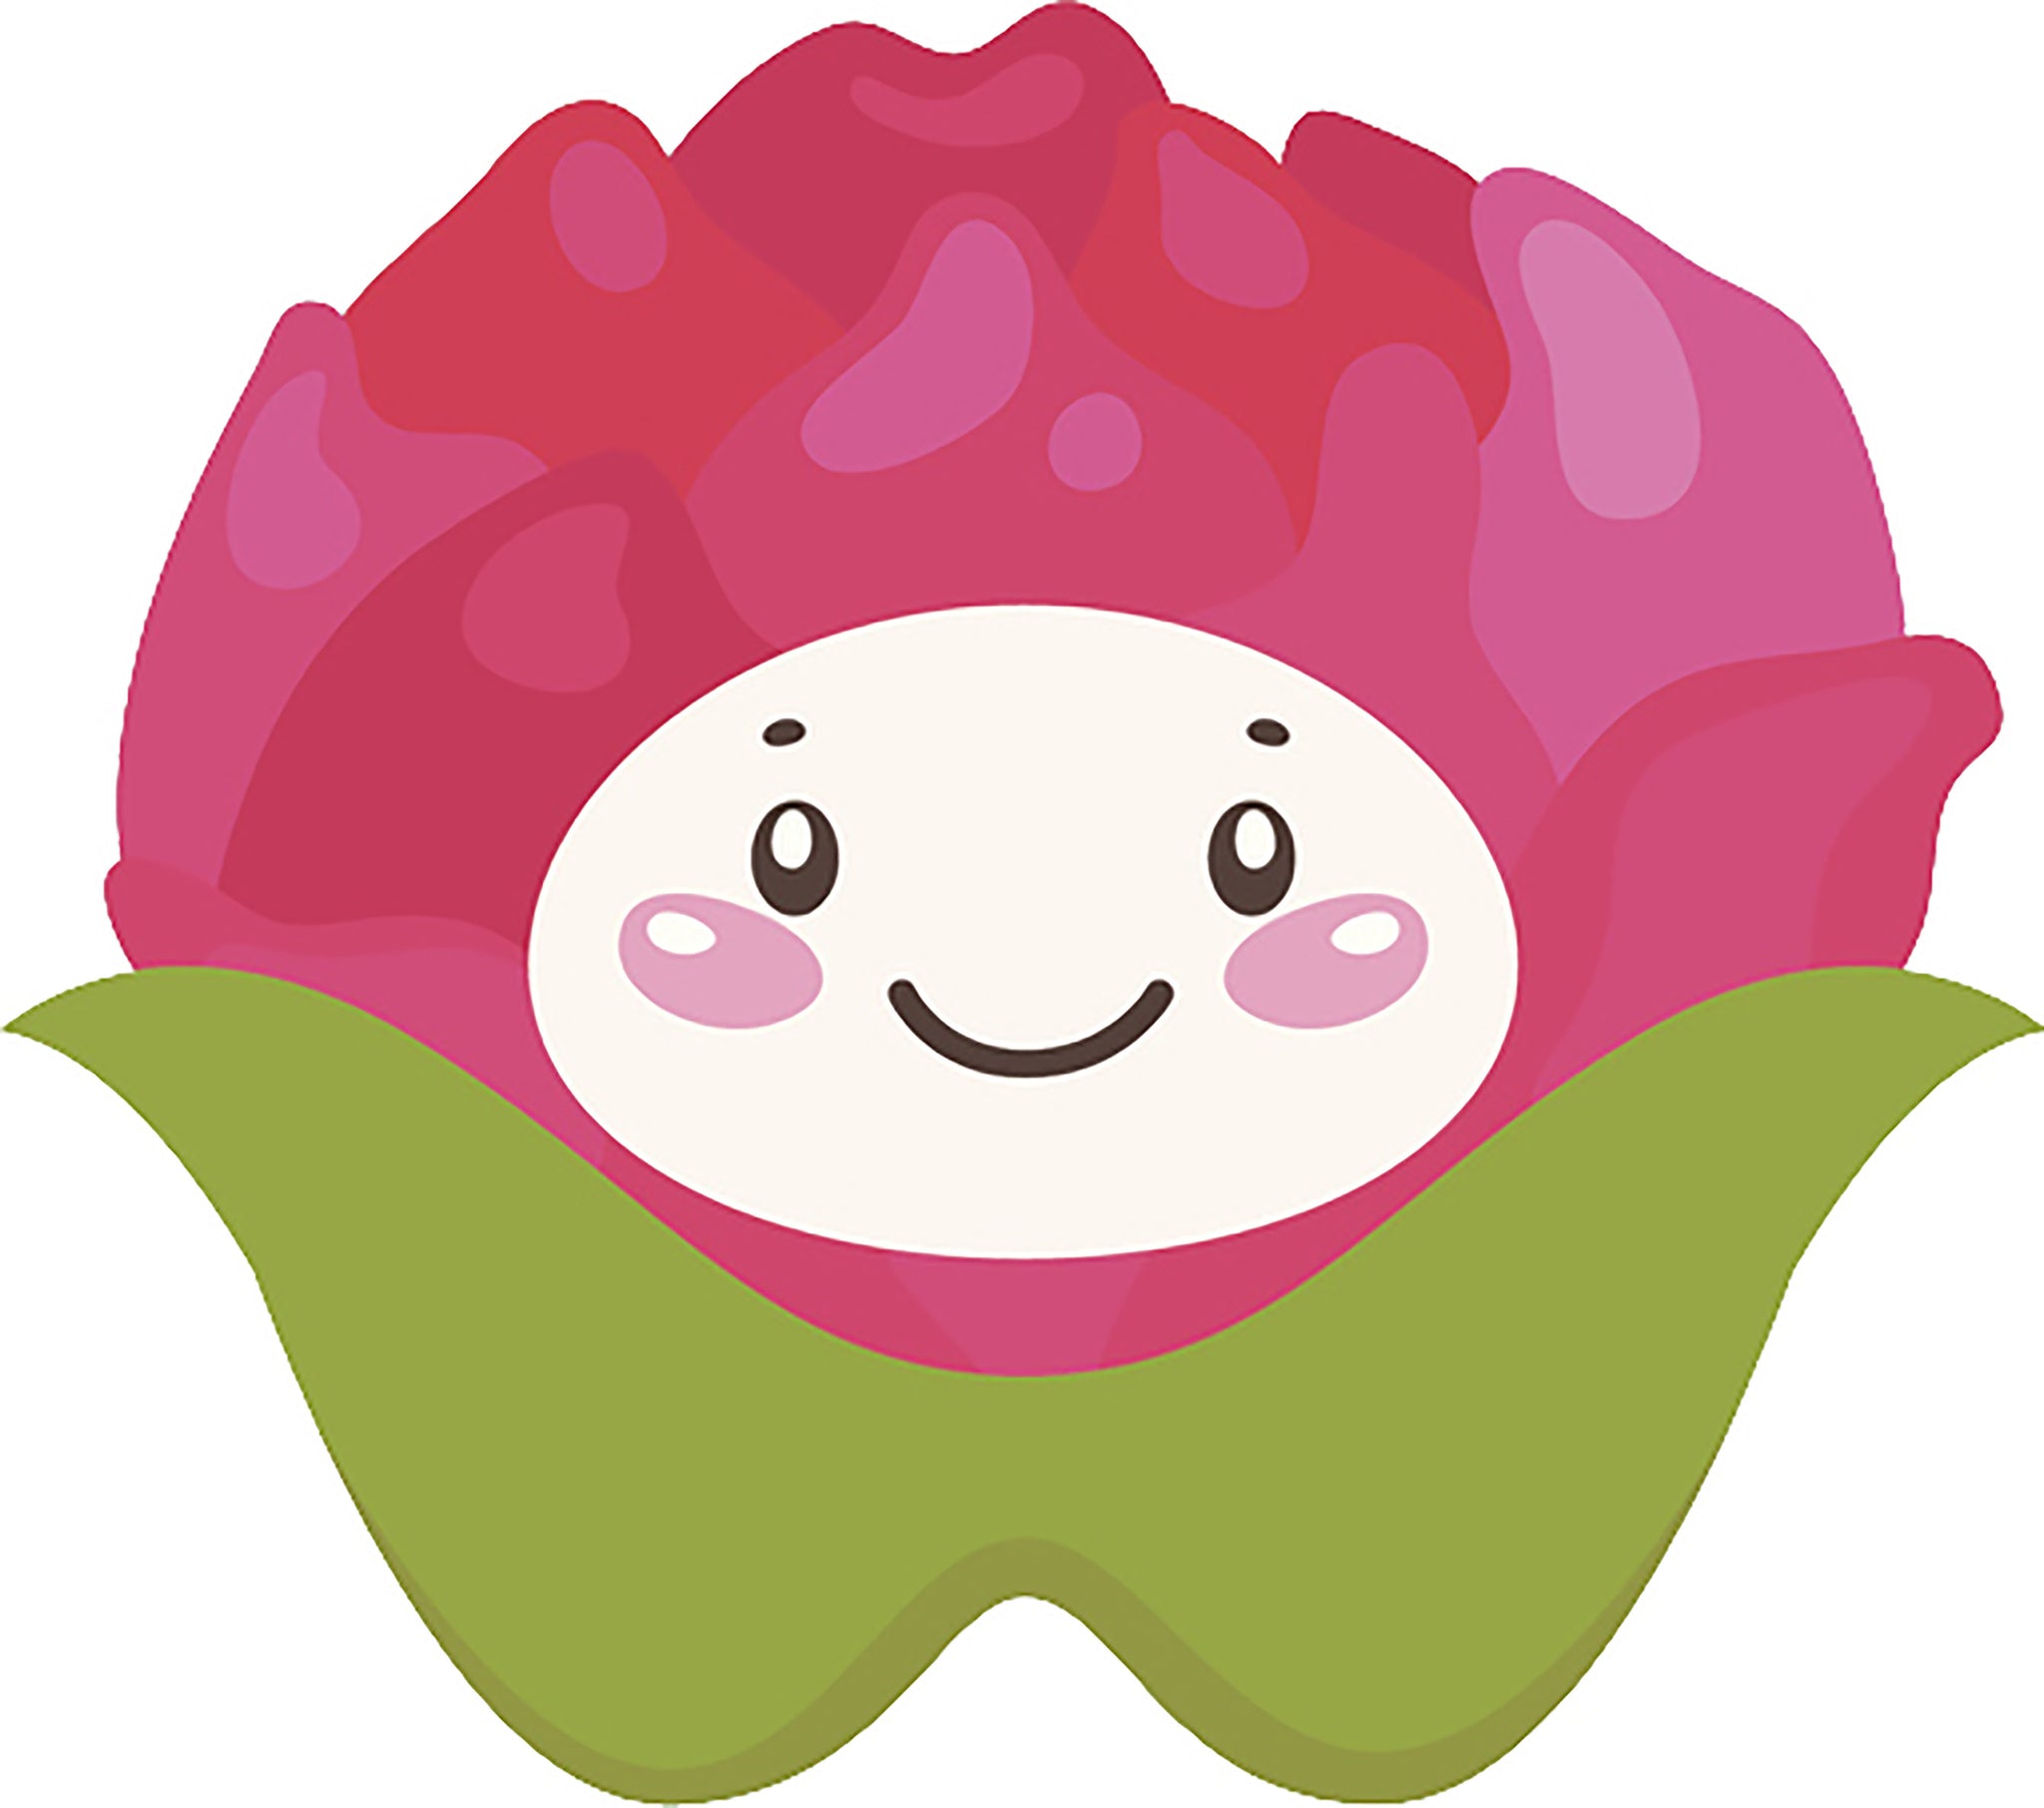 Cute Silly Kawaii Tooth Teeth Cartoon Emoji in Costume - Flower Vinyl Decal Sticker